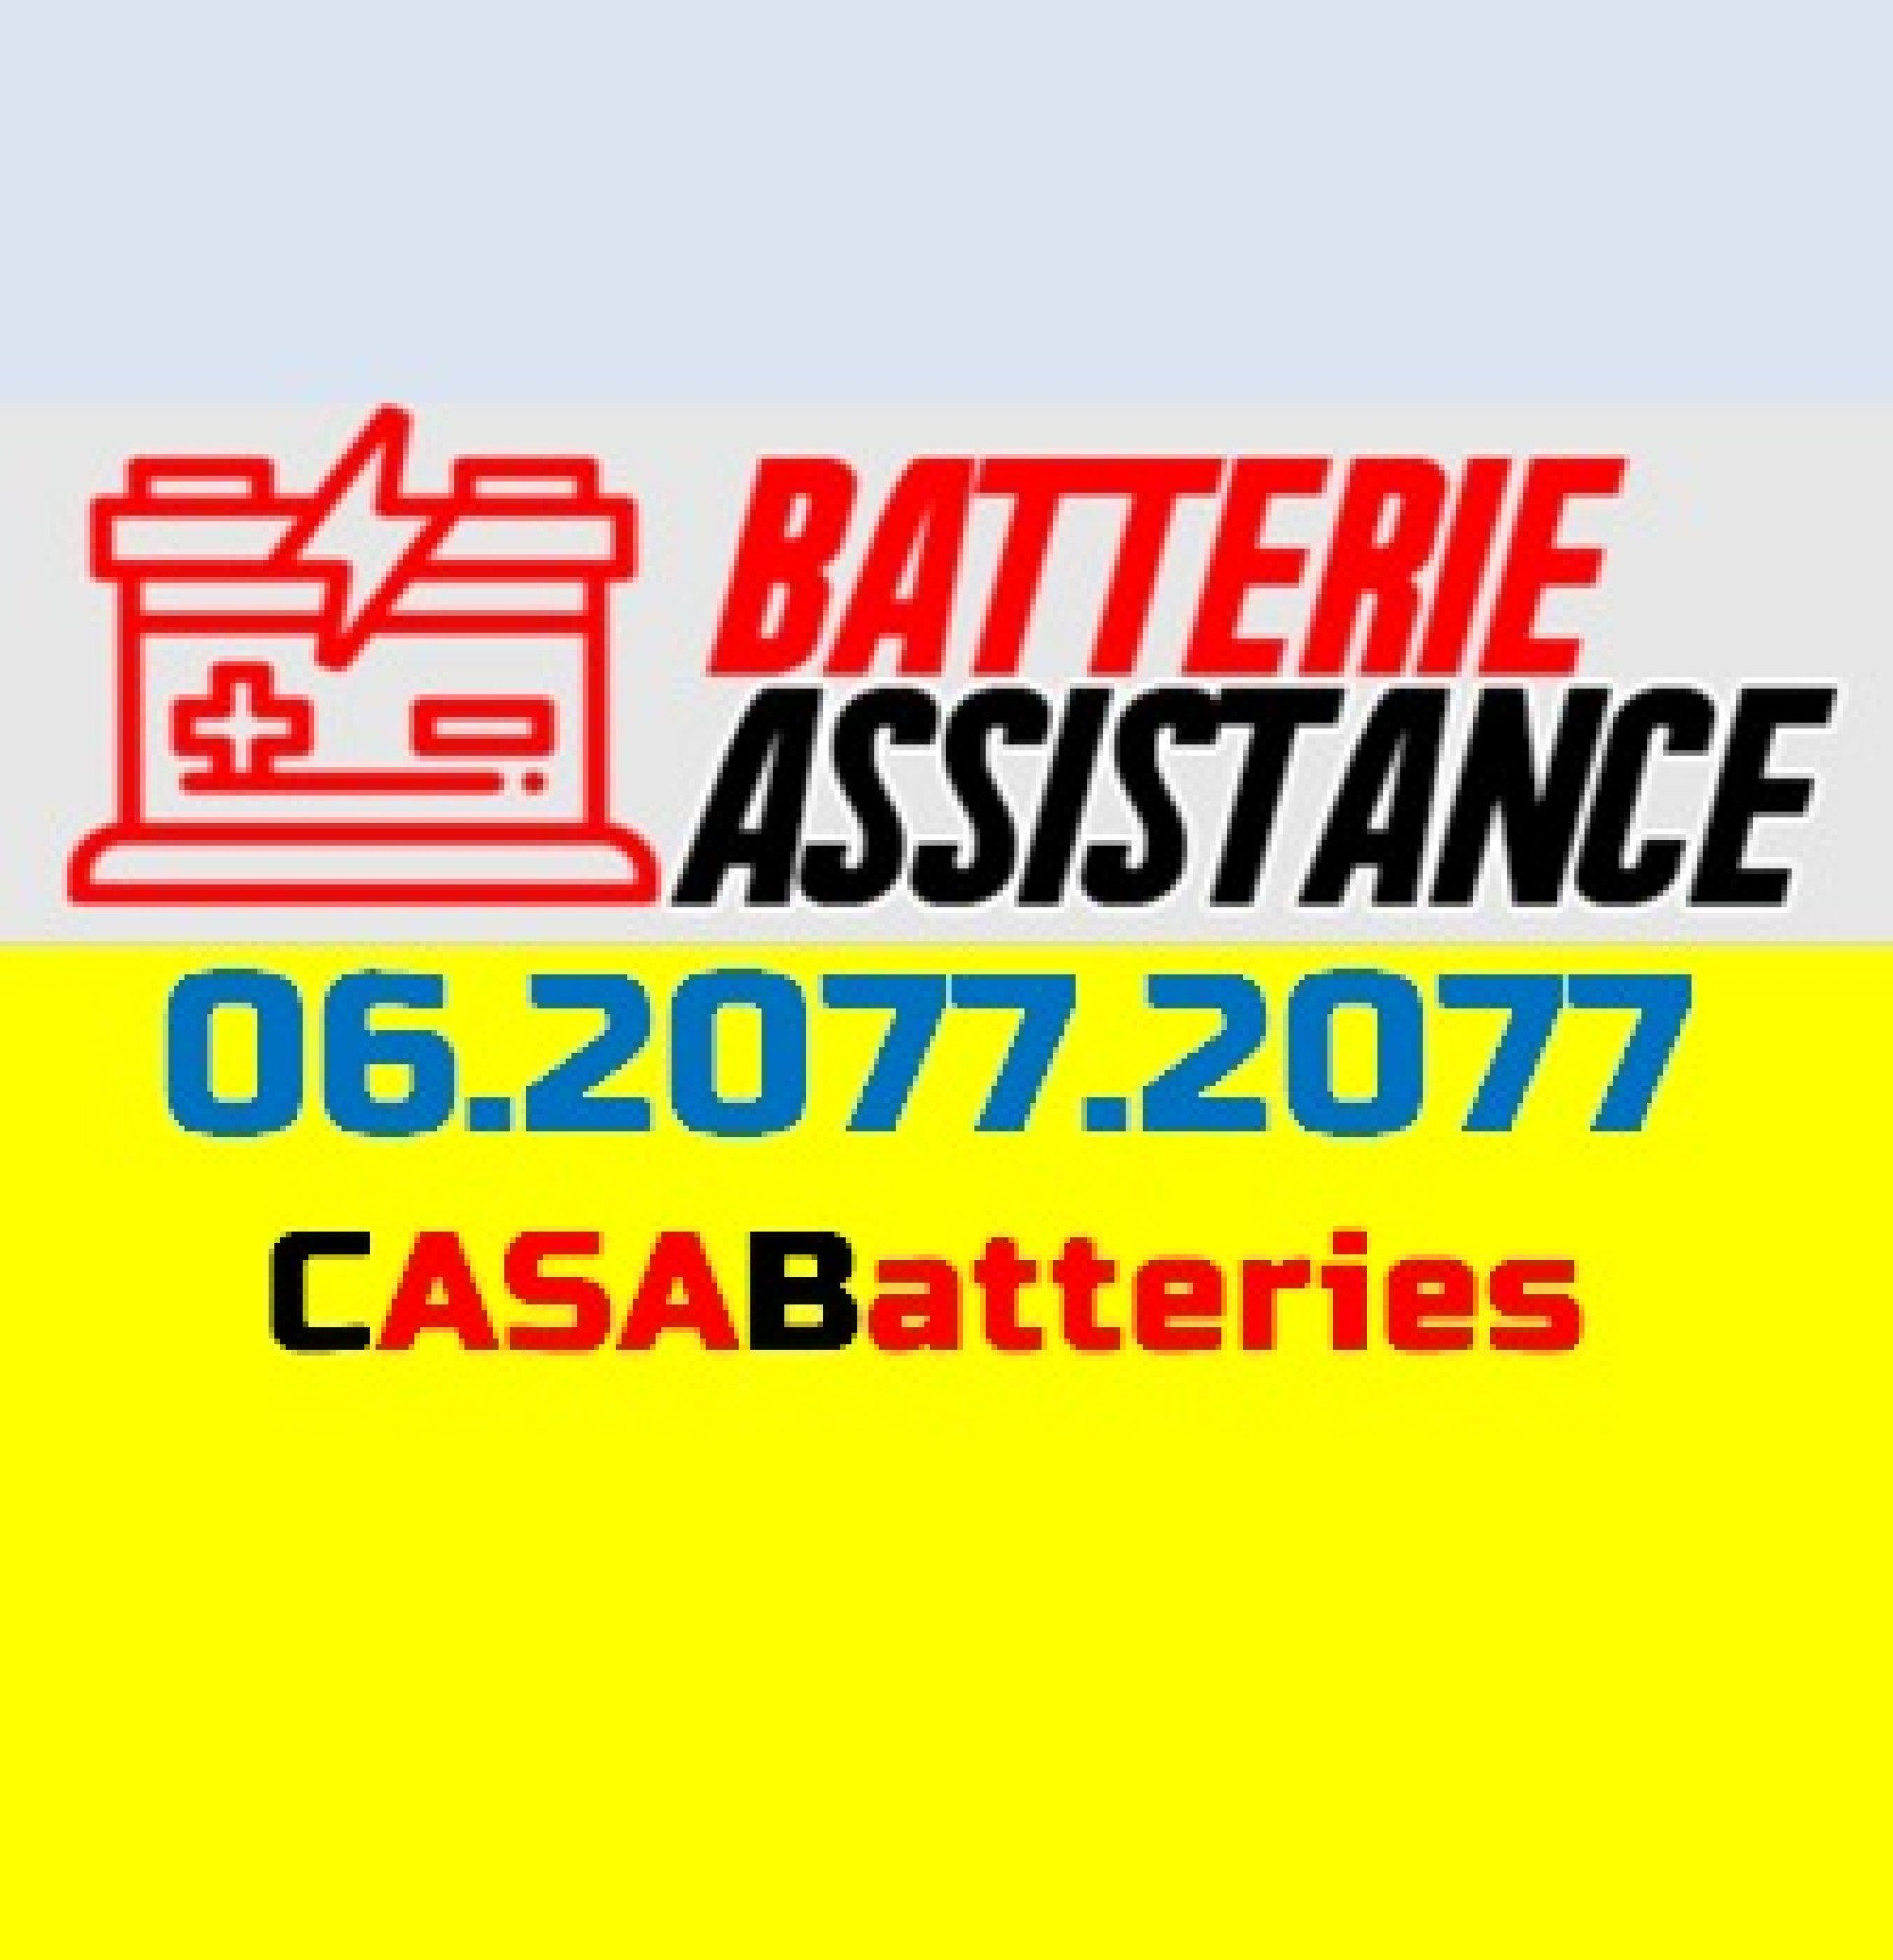 CASABatteries logo